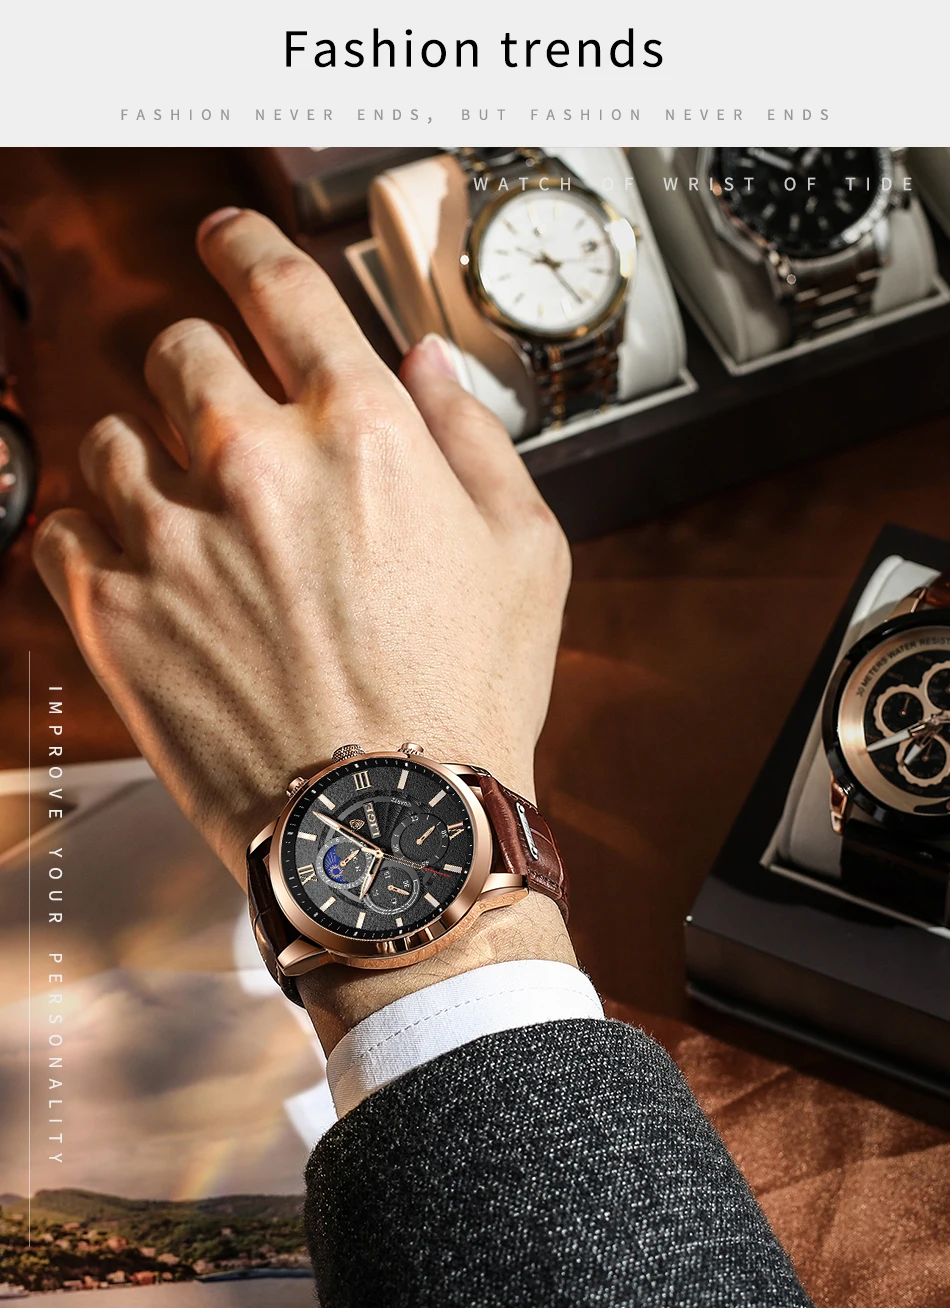 2022 LIGE Men's Watches Top Brand Luxury Men Wrist Watch Leather Quartz Watch Sports Waterproof Male Clock Relogio Masculino+Box